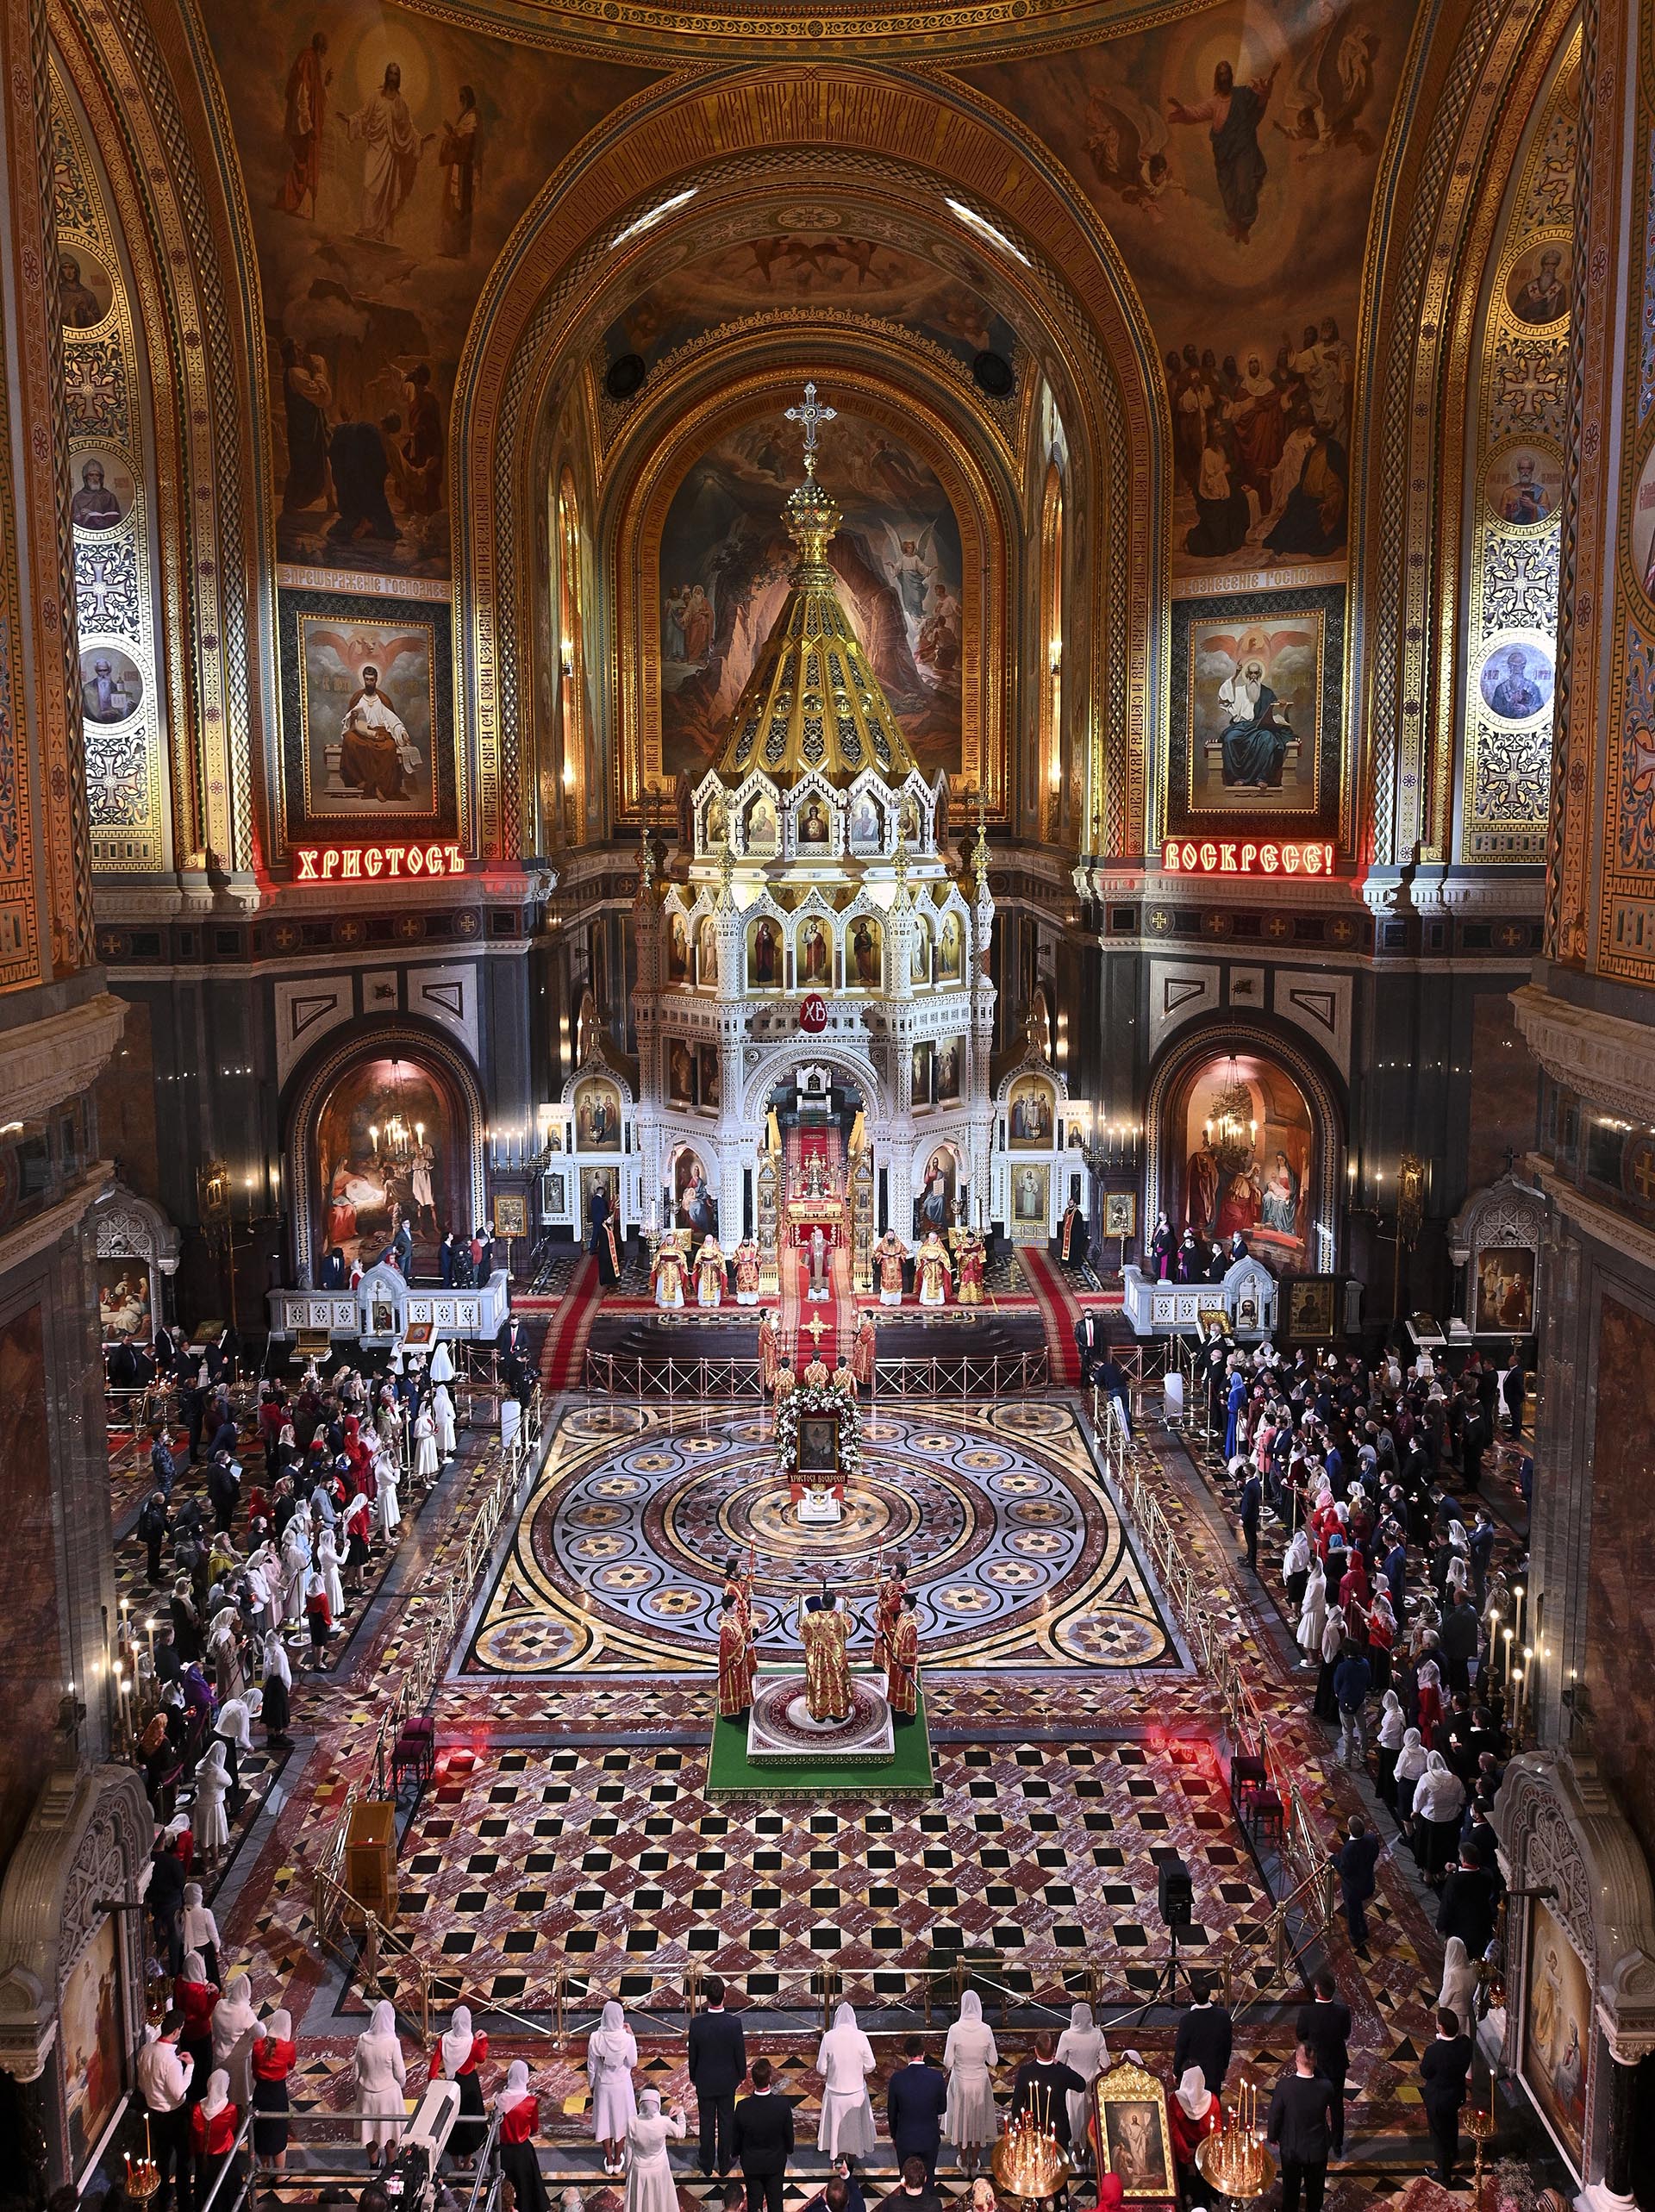 Servicio religiosos en medio de las celebraciones por la pascua de la Iglesia Ortodoxa Rusa
(Oleg Varov/Russian Orthodox Church Press Service via AP)